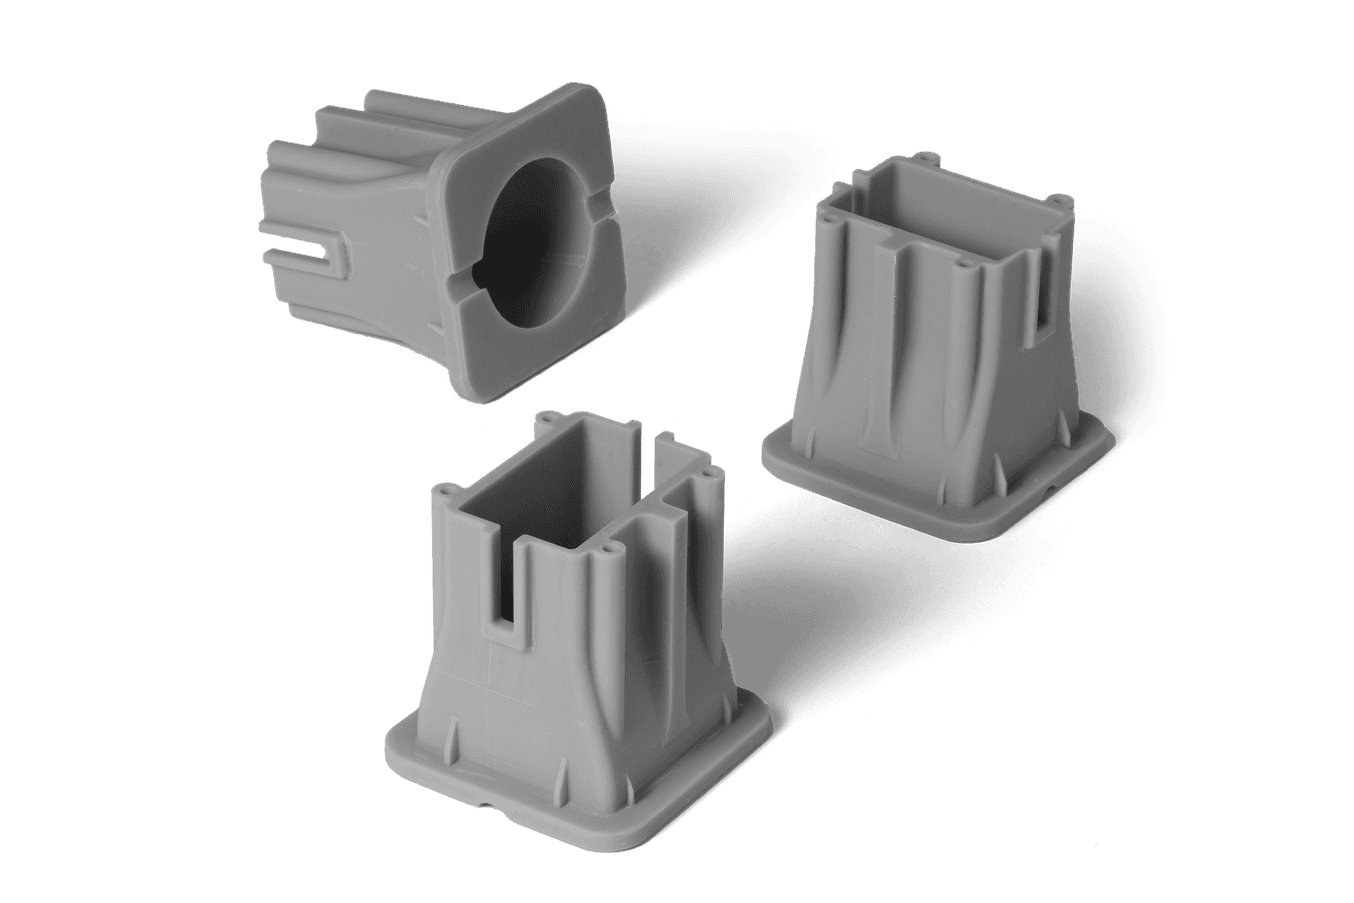 Heater holders printed in Flame Retardant Resin